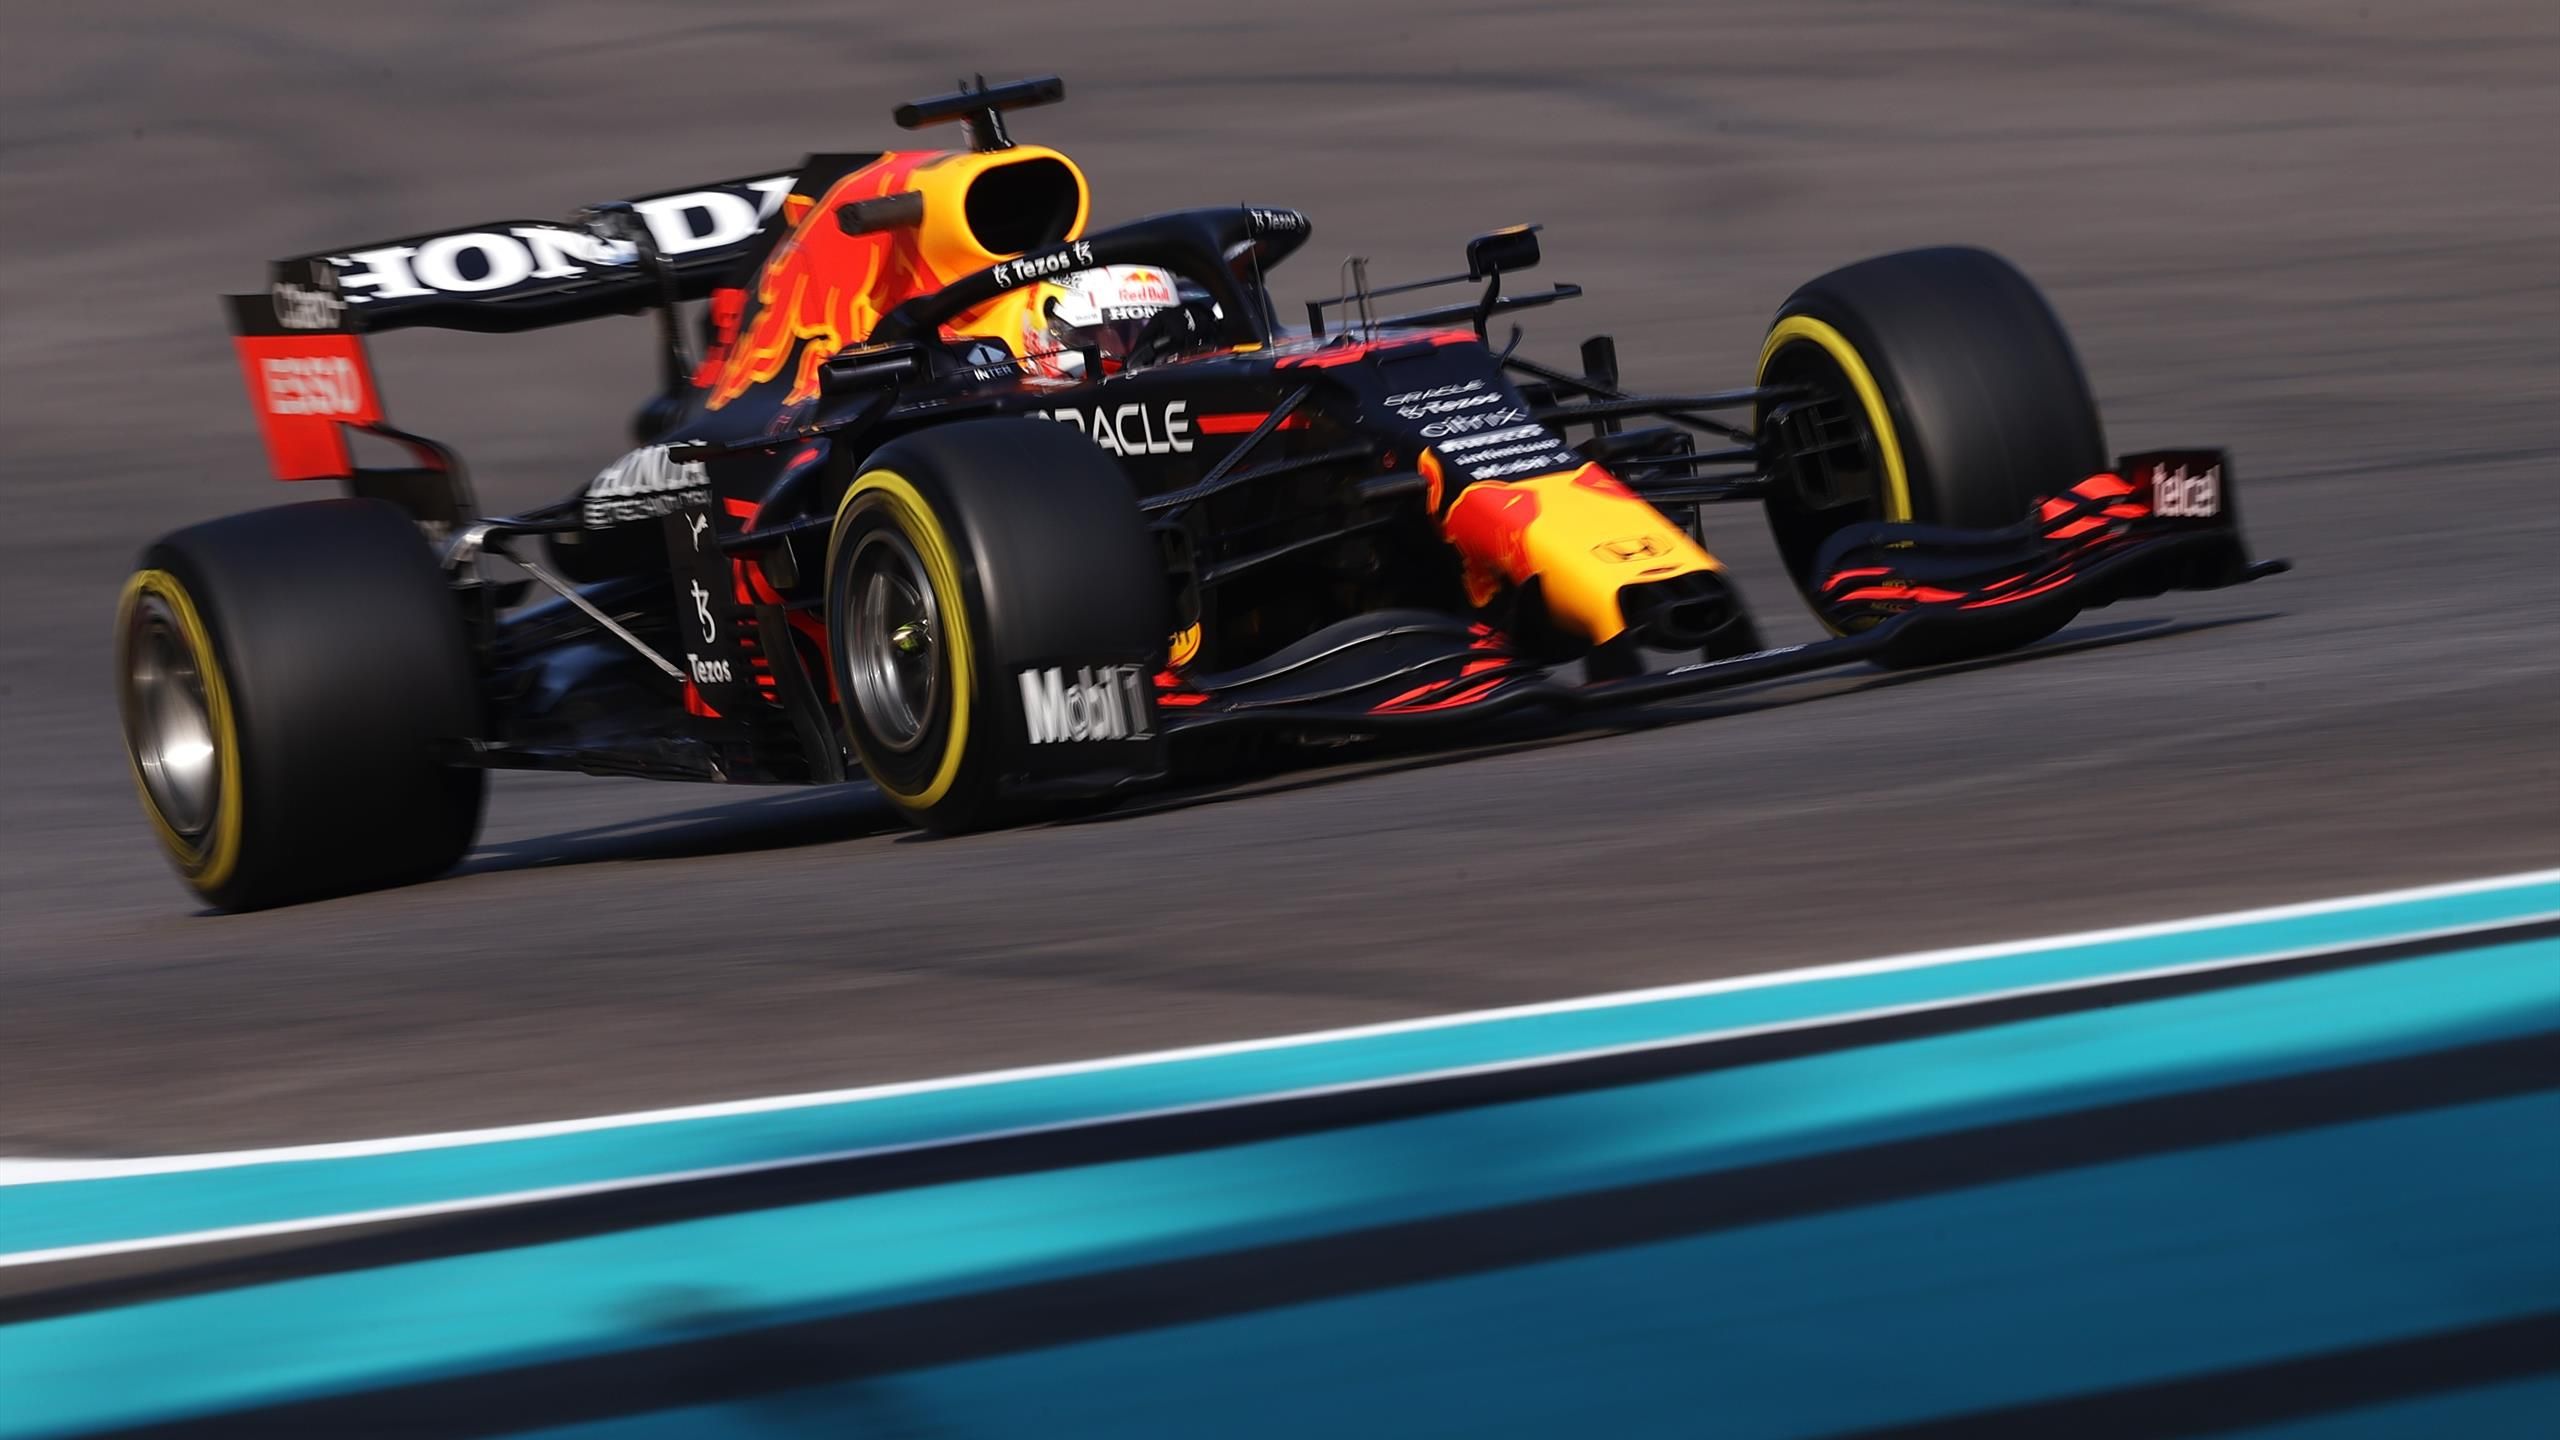 Abu Dhabi Grand Prix 2021 - Lewis Hamilton fastest in FP3, Max Verstappen second on Yas Marina Circuit